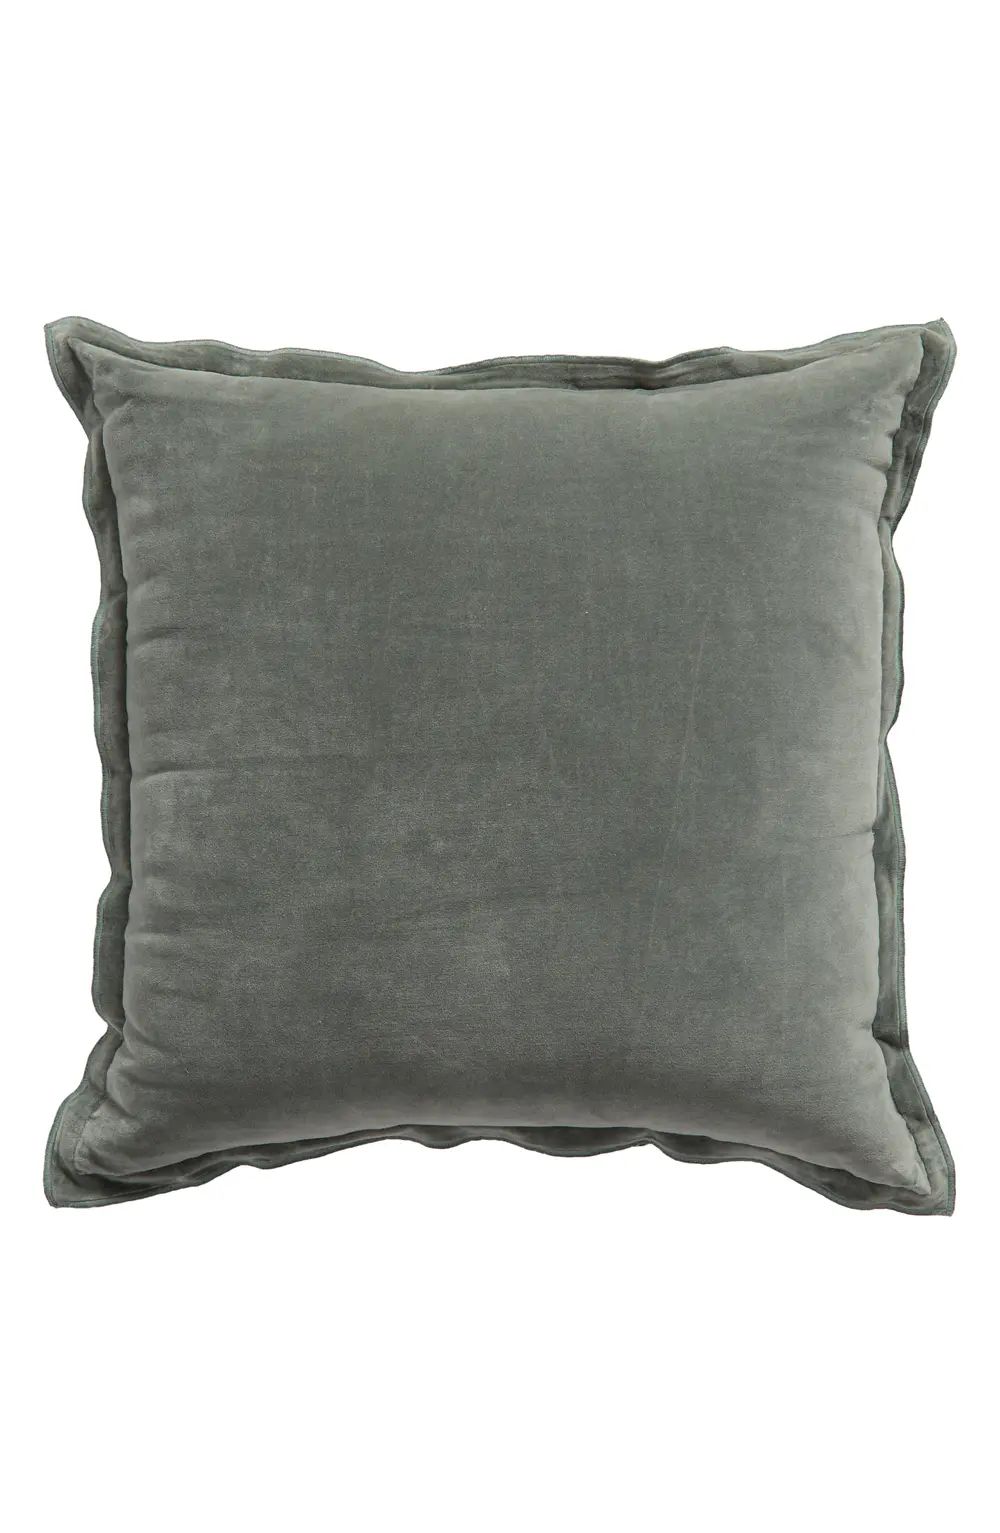 Nordstrom Velvet Accent Pillow in Green Balsam at Nordstrom | Nordstrom Canada